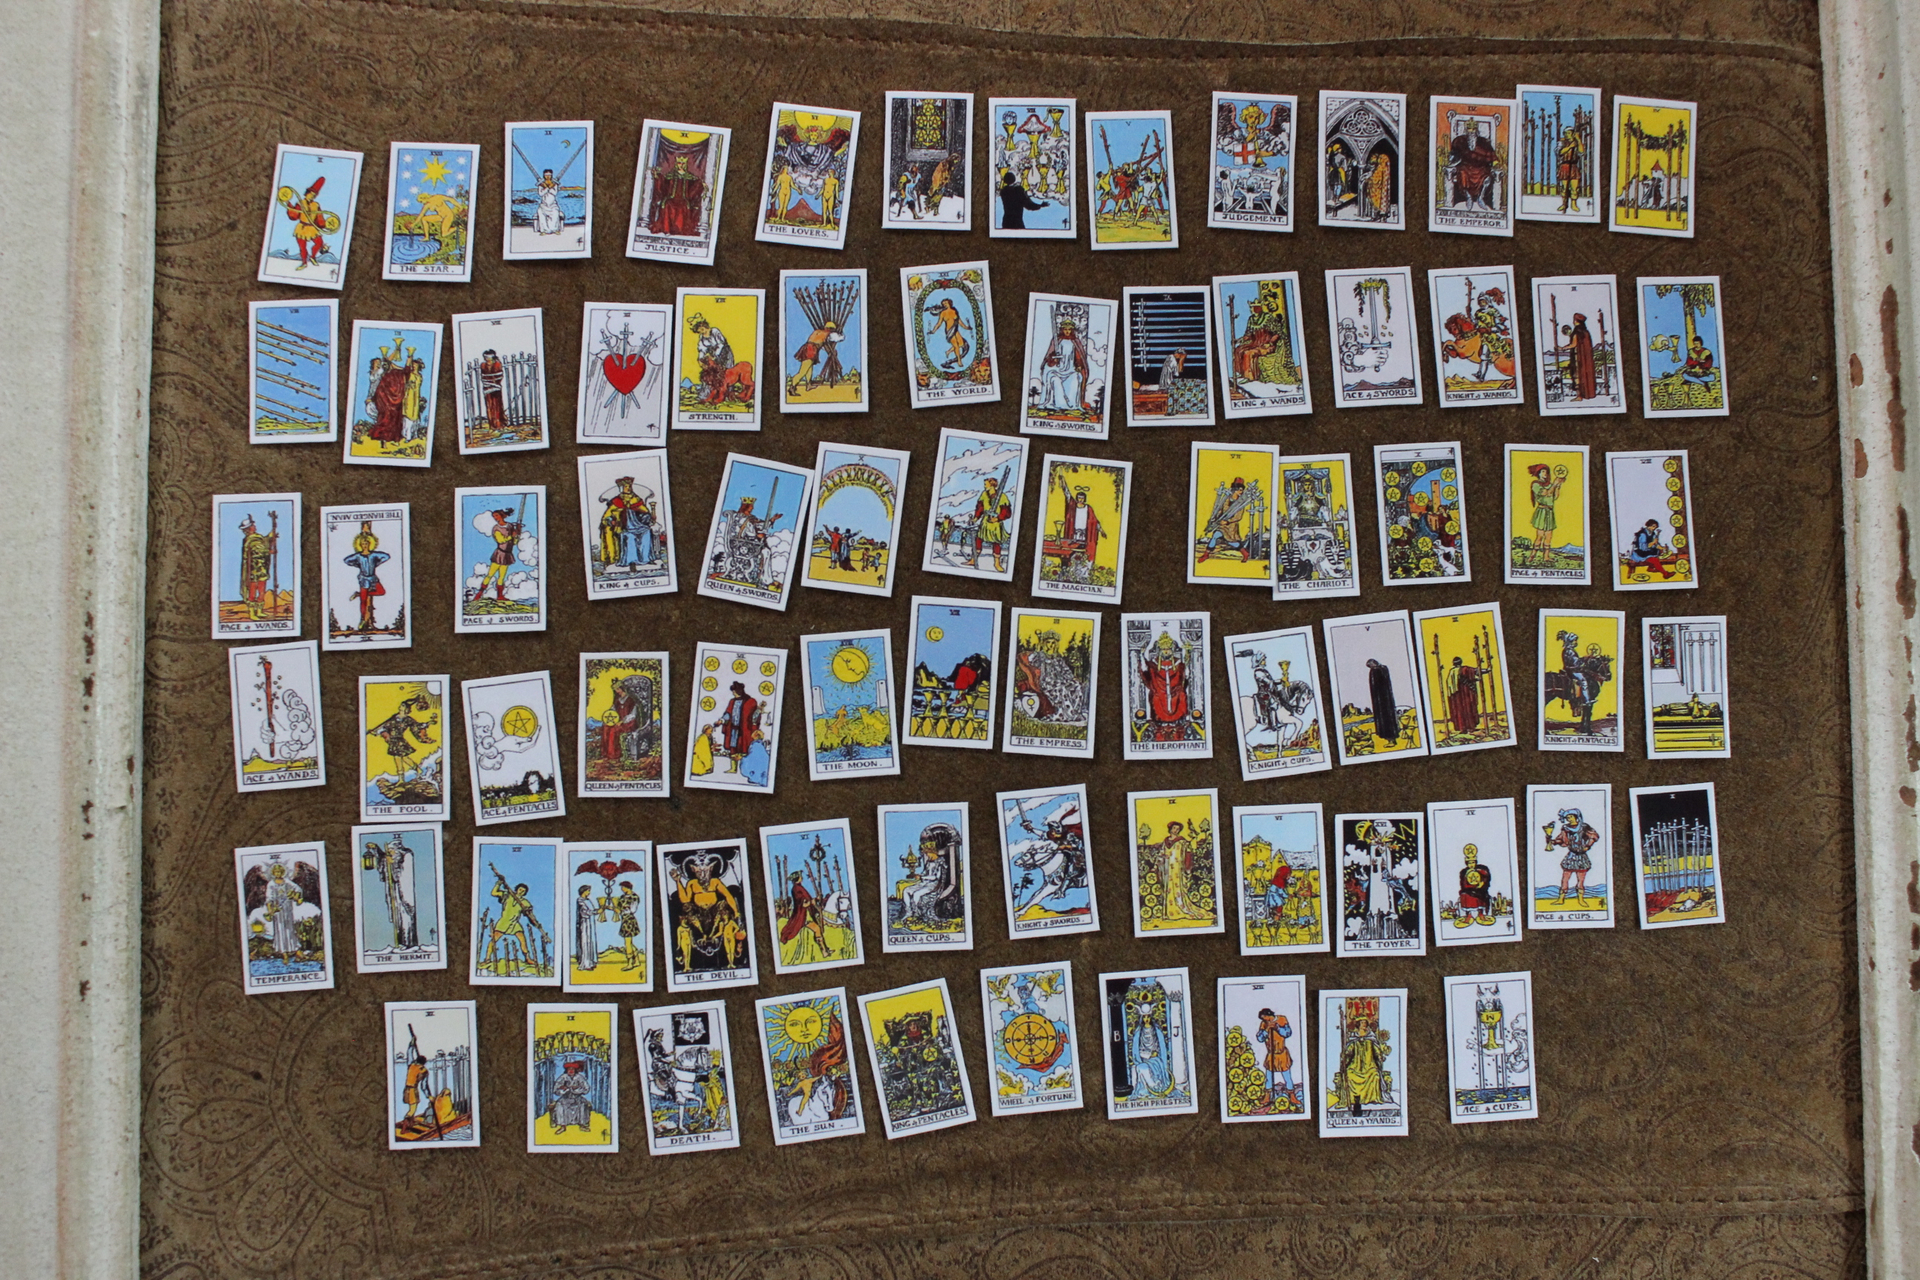 The Awakening Necklace w/Miniature Full 78 Card Tarot Deck,Antique Kuchi Gypsy Findings, Sterling The Judgement Tarot Card,Banjara Bead Tassel+  Much More!